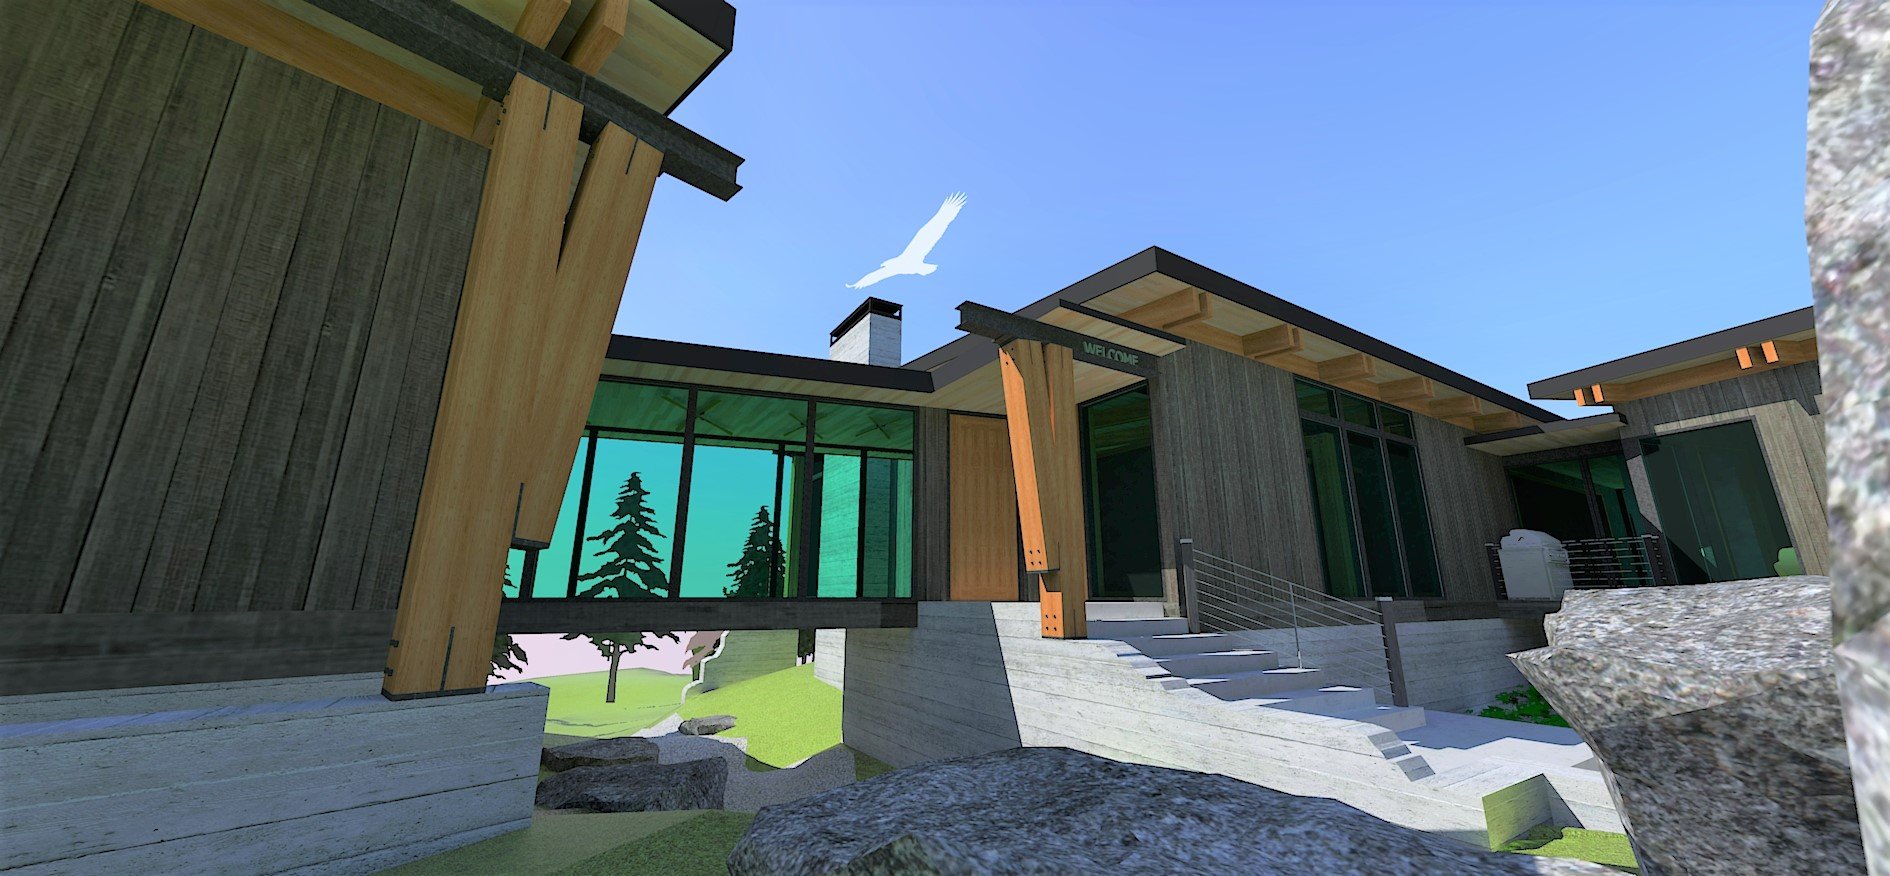 PNW Modern Lodge - Scene 10 (enhanced).jpg